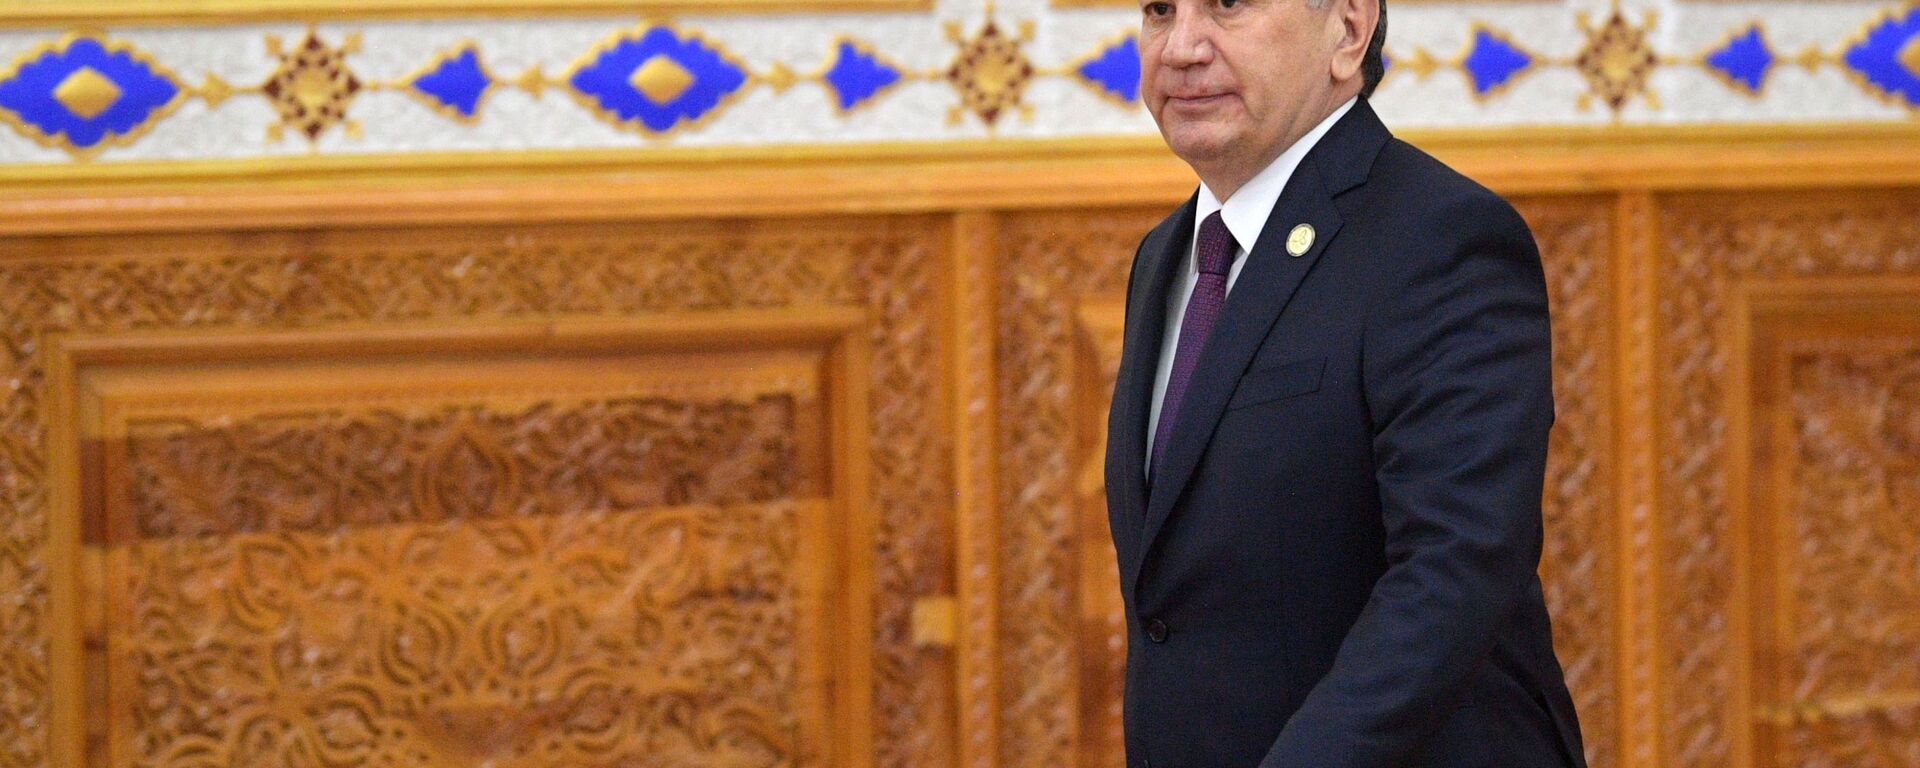 Президент Узбекистана Шавкат Мирзиеев - Sputnik Узбекистан, 1920, 03.08.2019